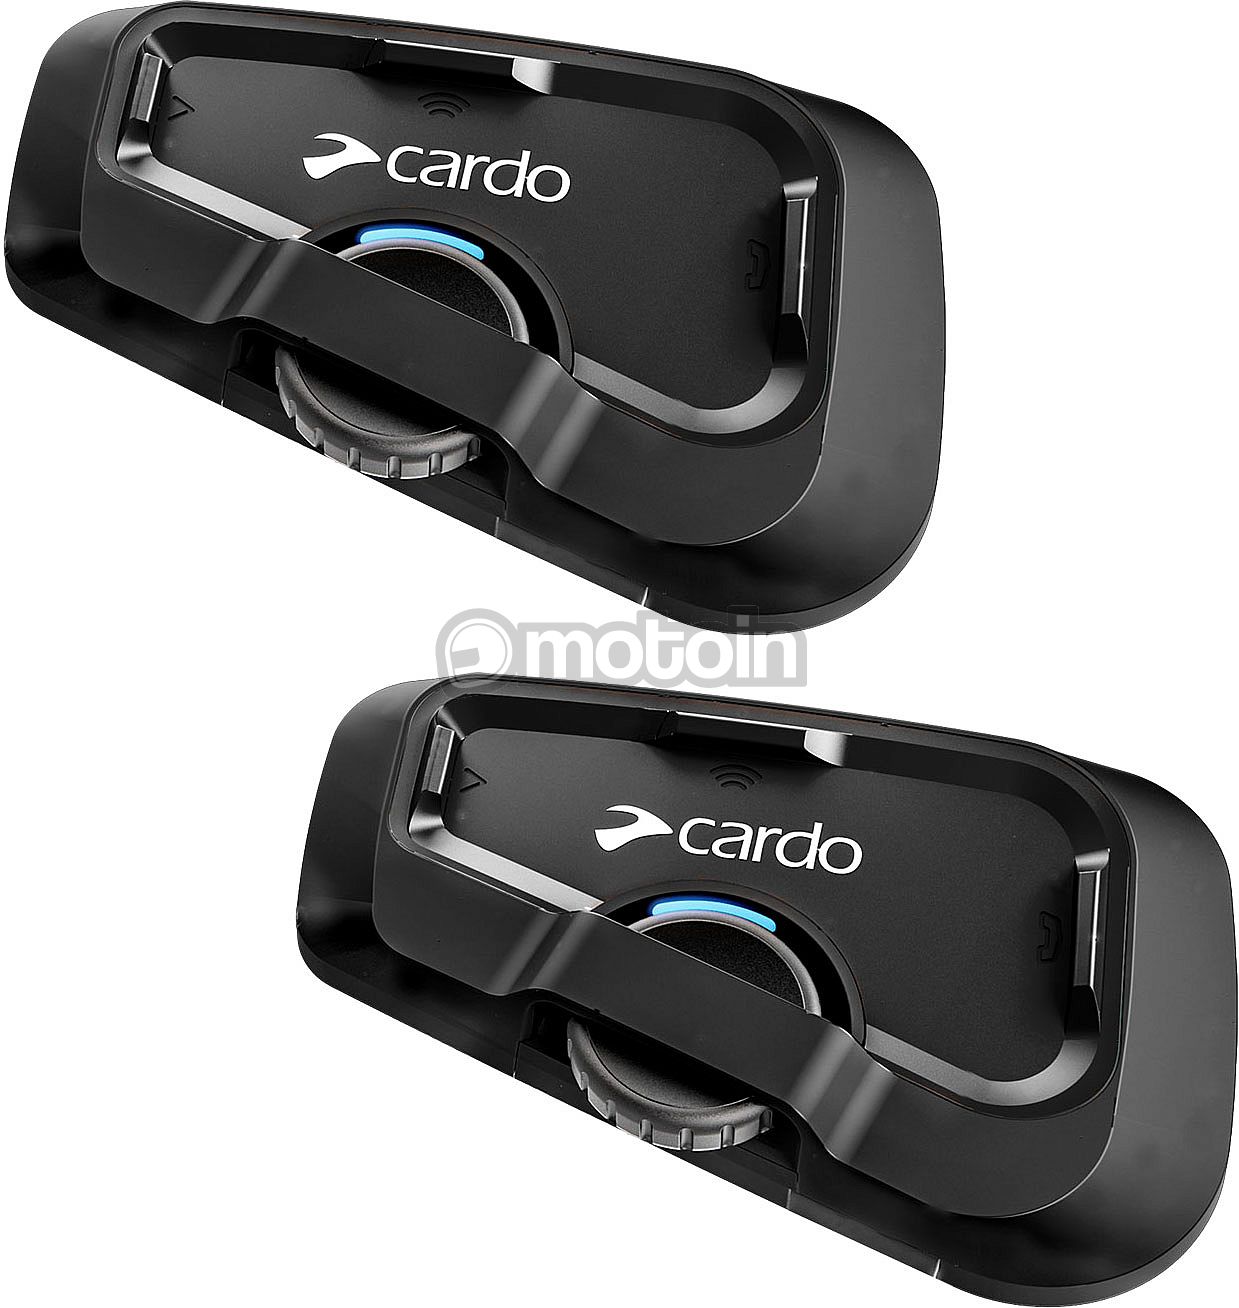 Cardo Spirit & Cardo Freecom X : deux nouvelles gammes d'intercoms